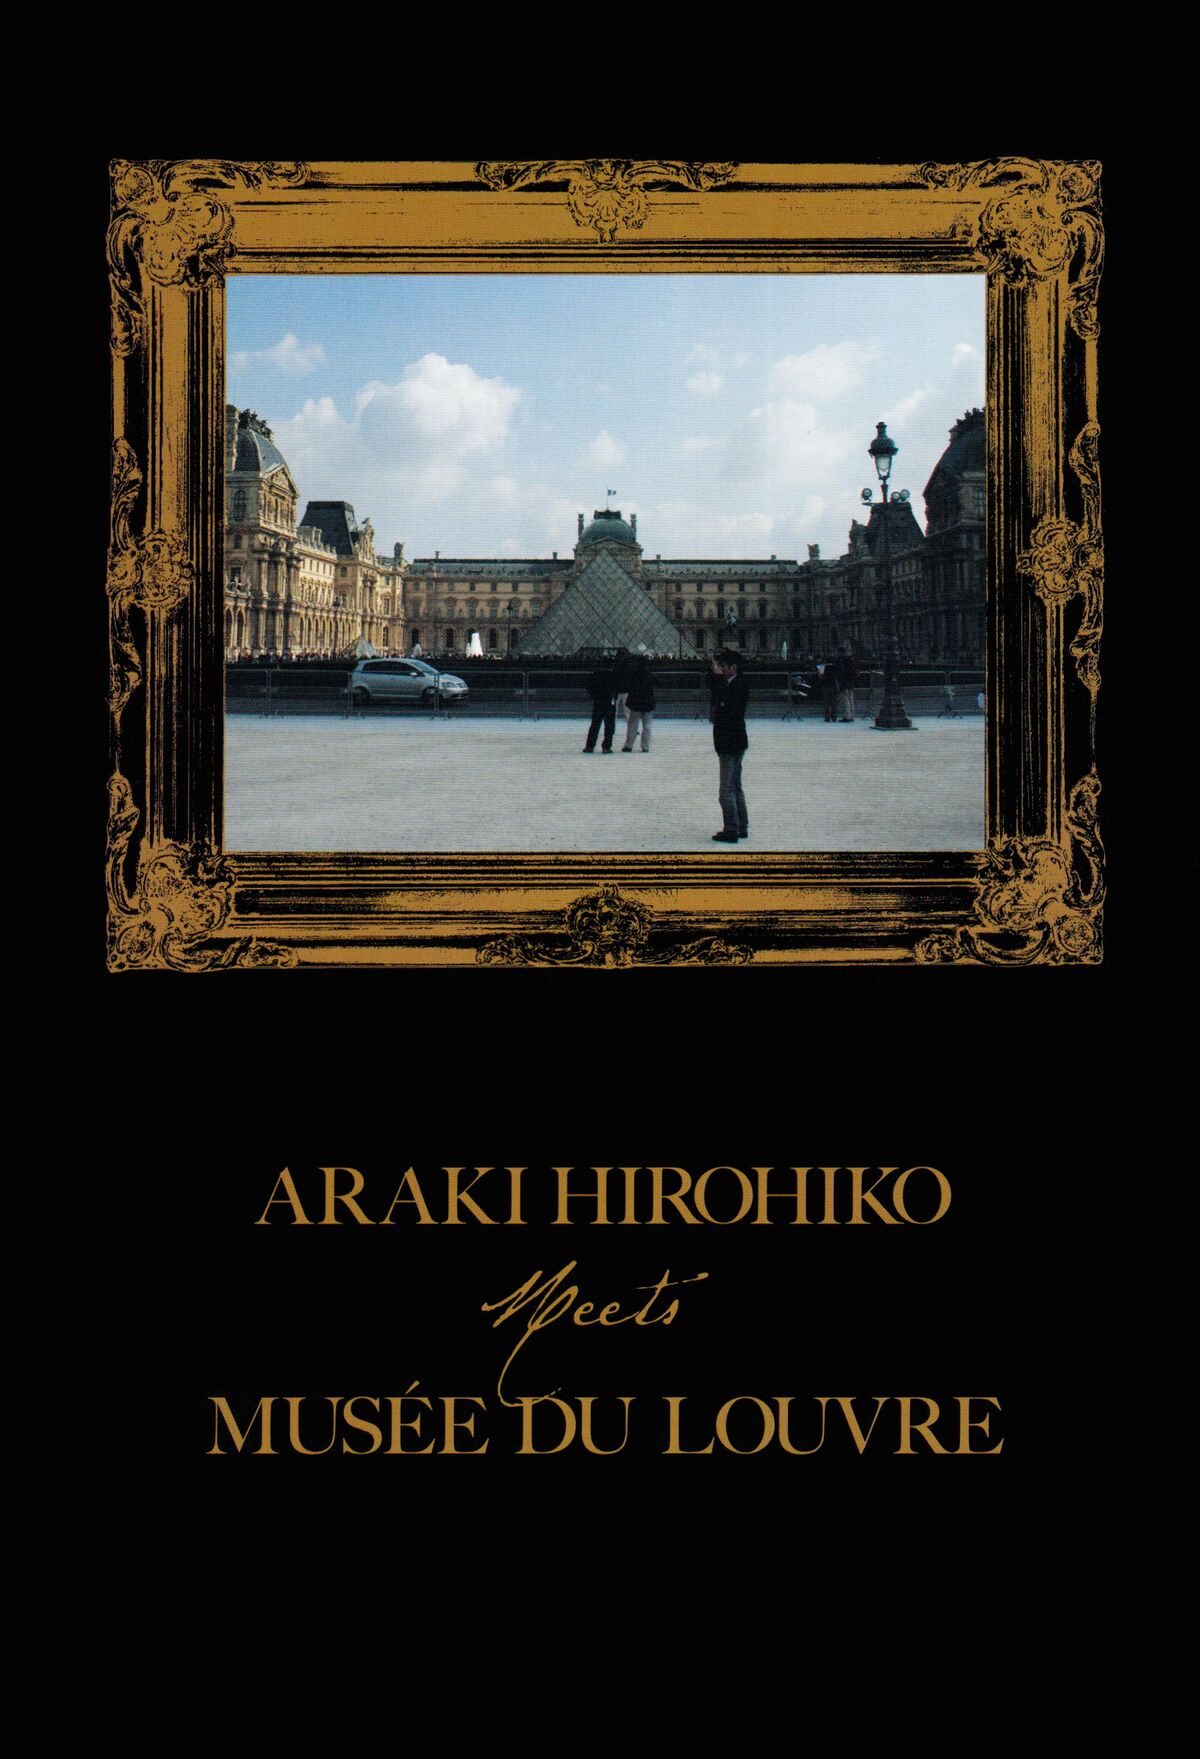 French Rohan au Louvre JoJo's Bizarre Adventure Hirohiko Araki